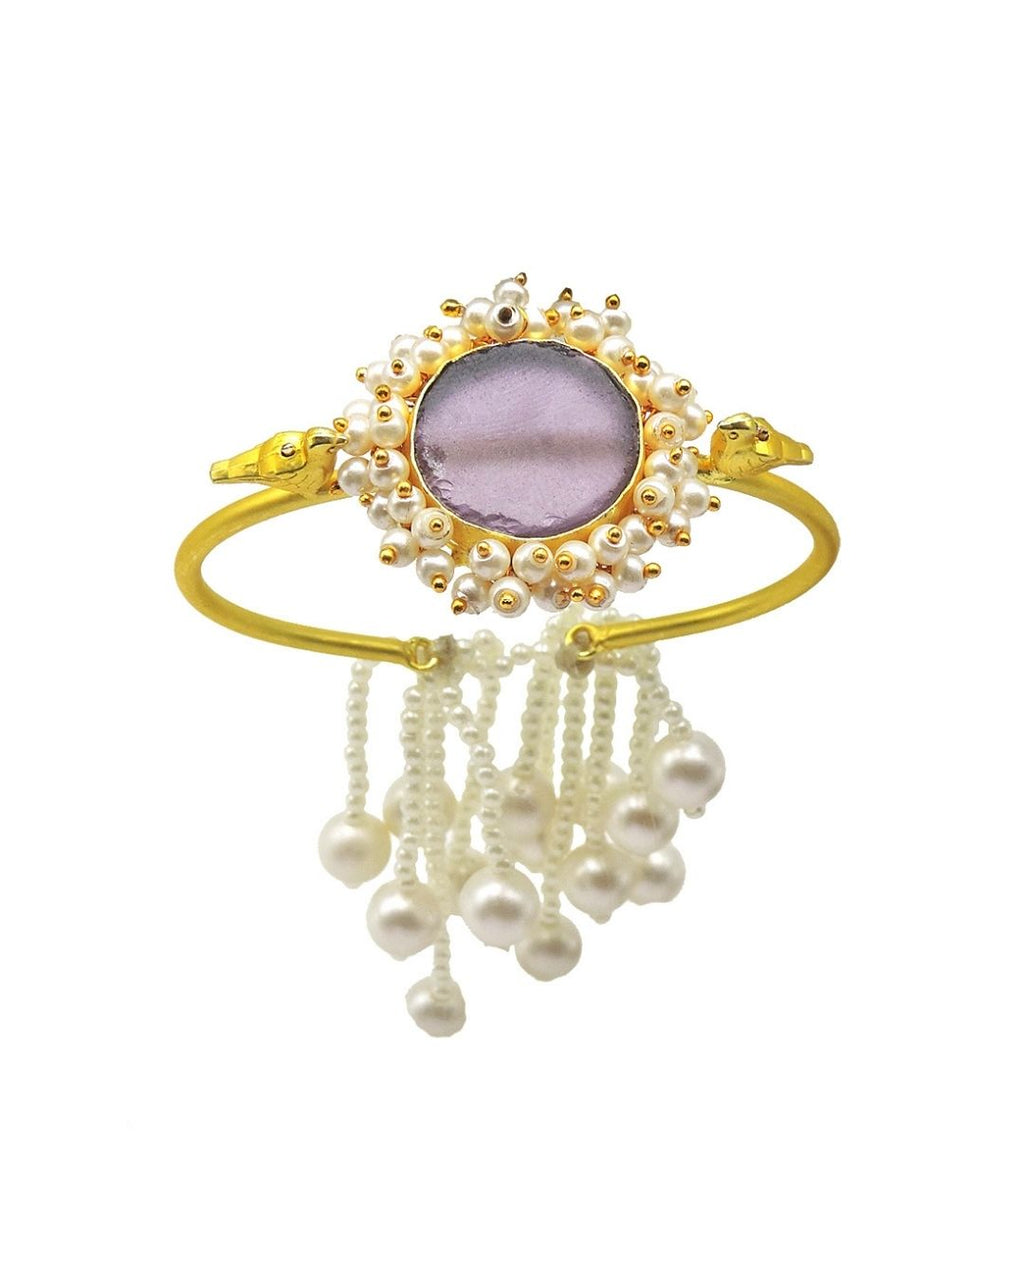 Bloom Tassel Cuff (Amethyst) - Bracelets & Cuffs - Handcrafted Jewellery - Made in India - Dubai Jewellery, Fashion & Lifestyle - Dori